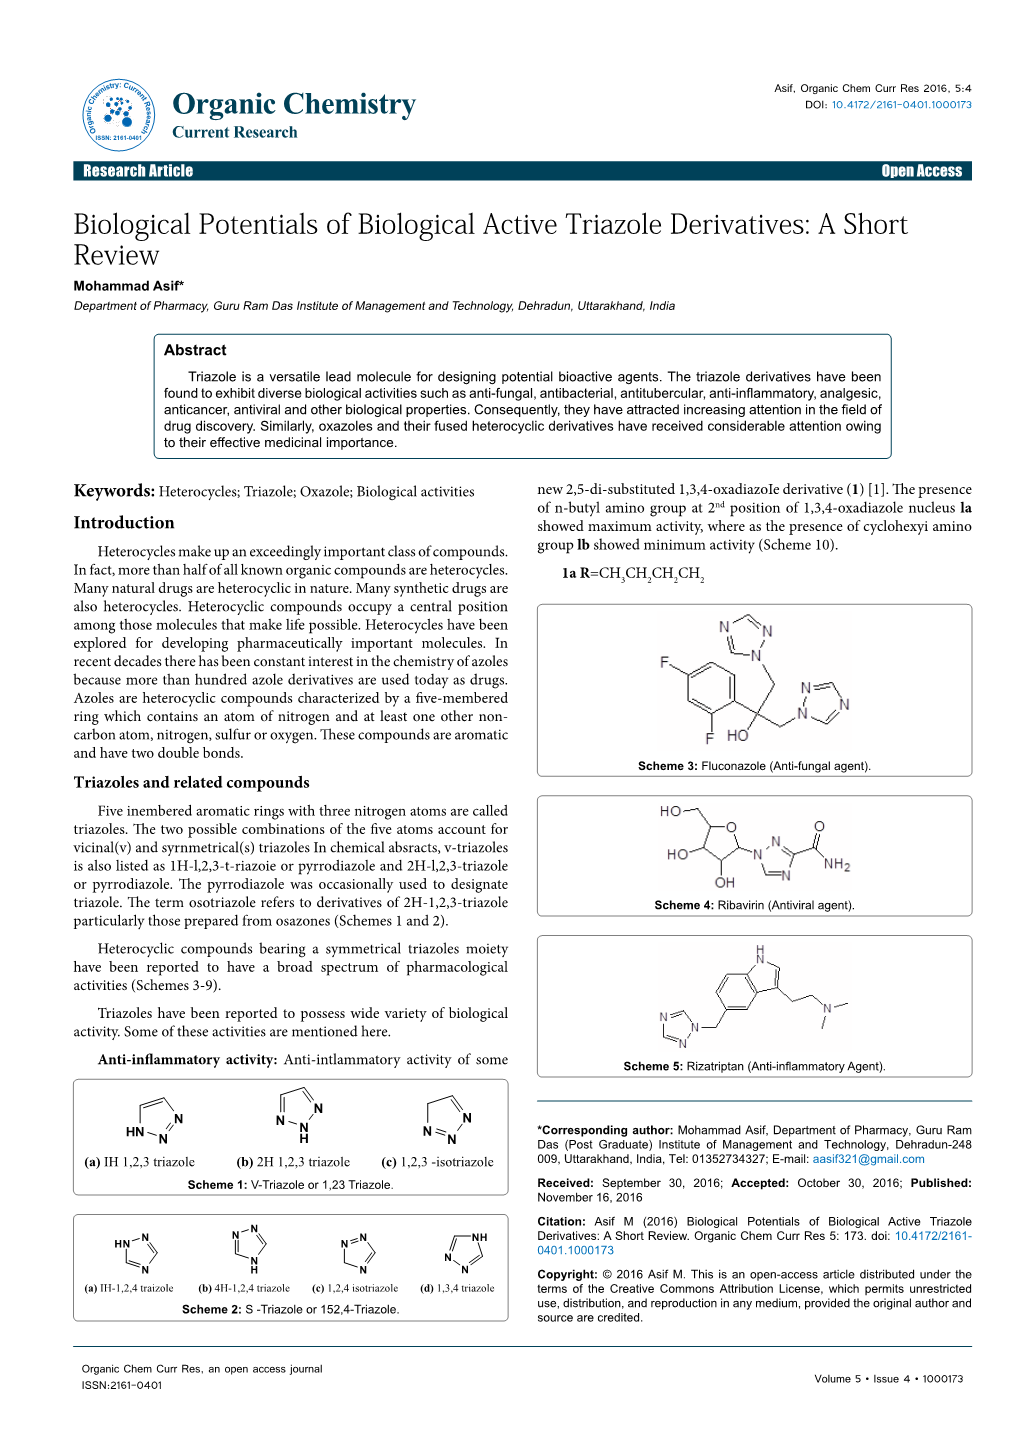 Biological Potentials of Biological Active Triazole Derivatives: a Short